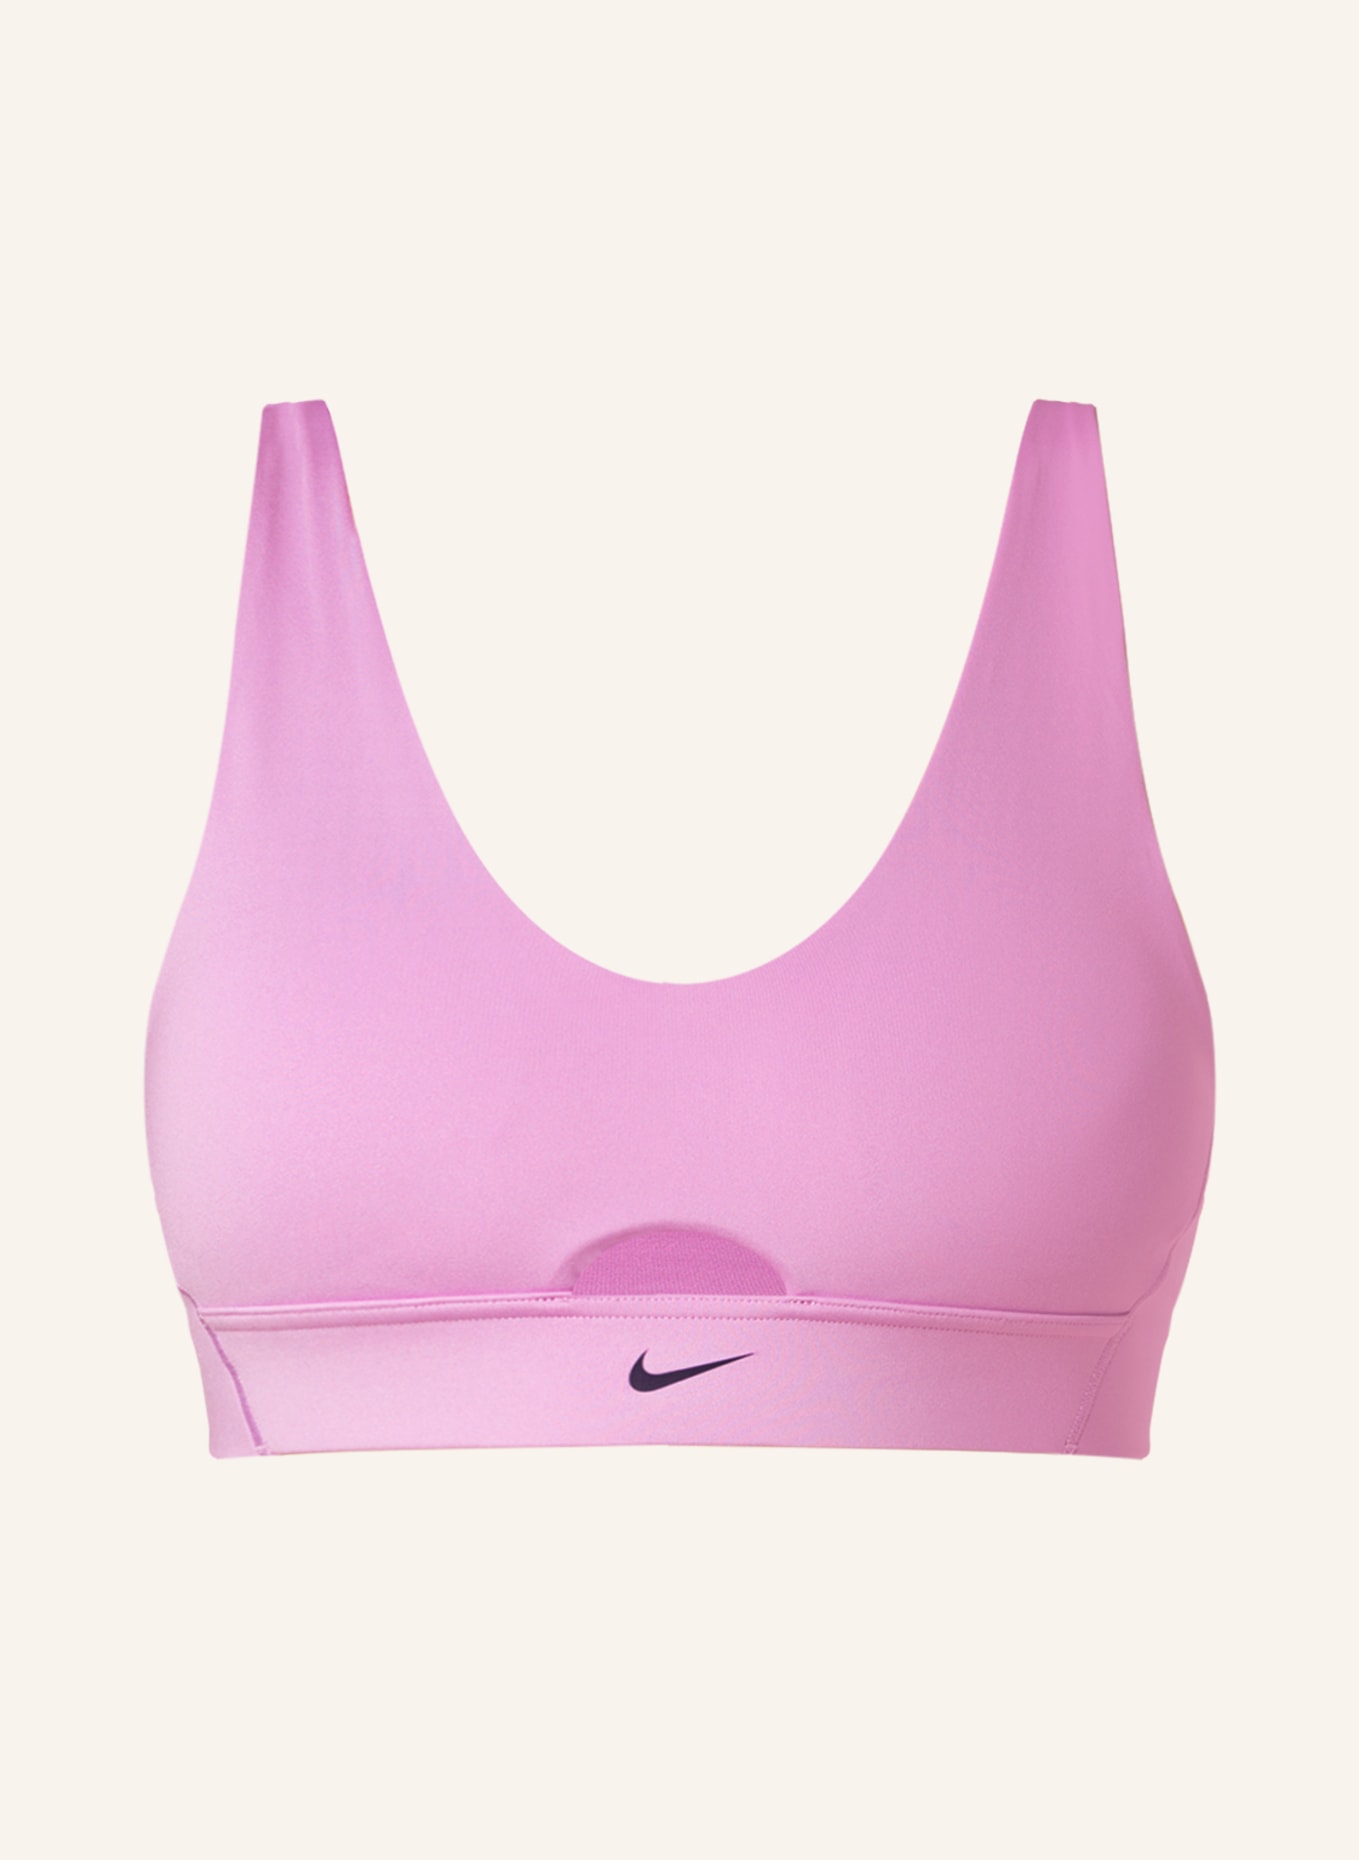 Nike Sports bra INDY PLUNGE CUT-OUT in purple